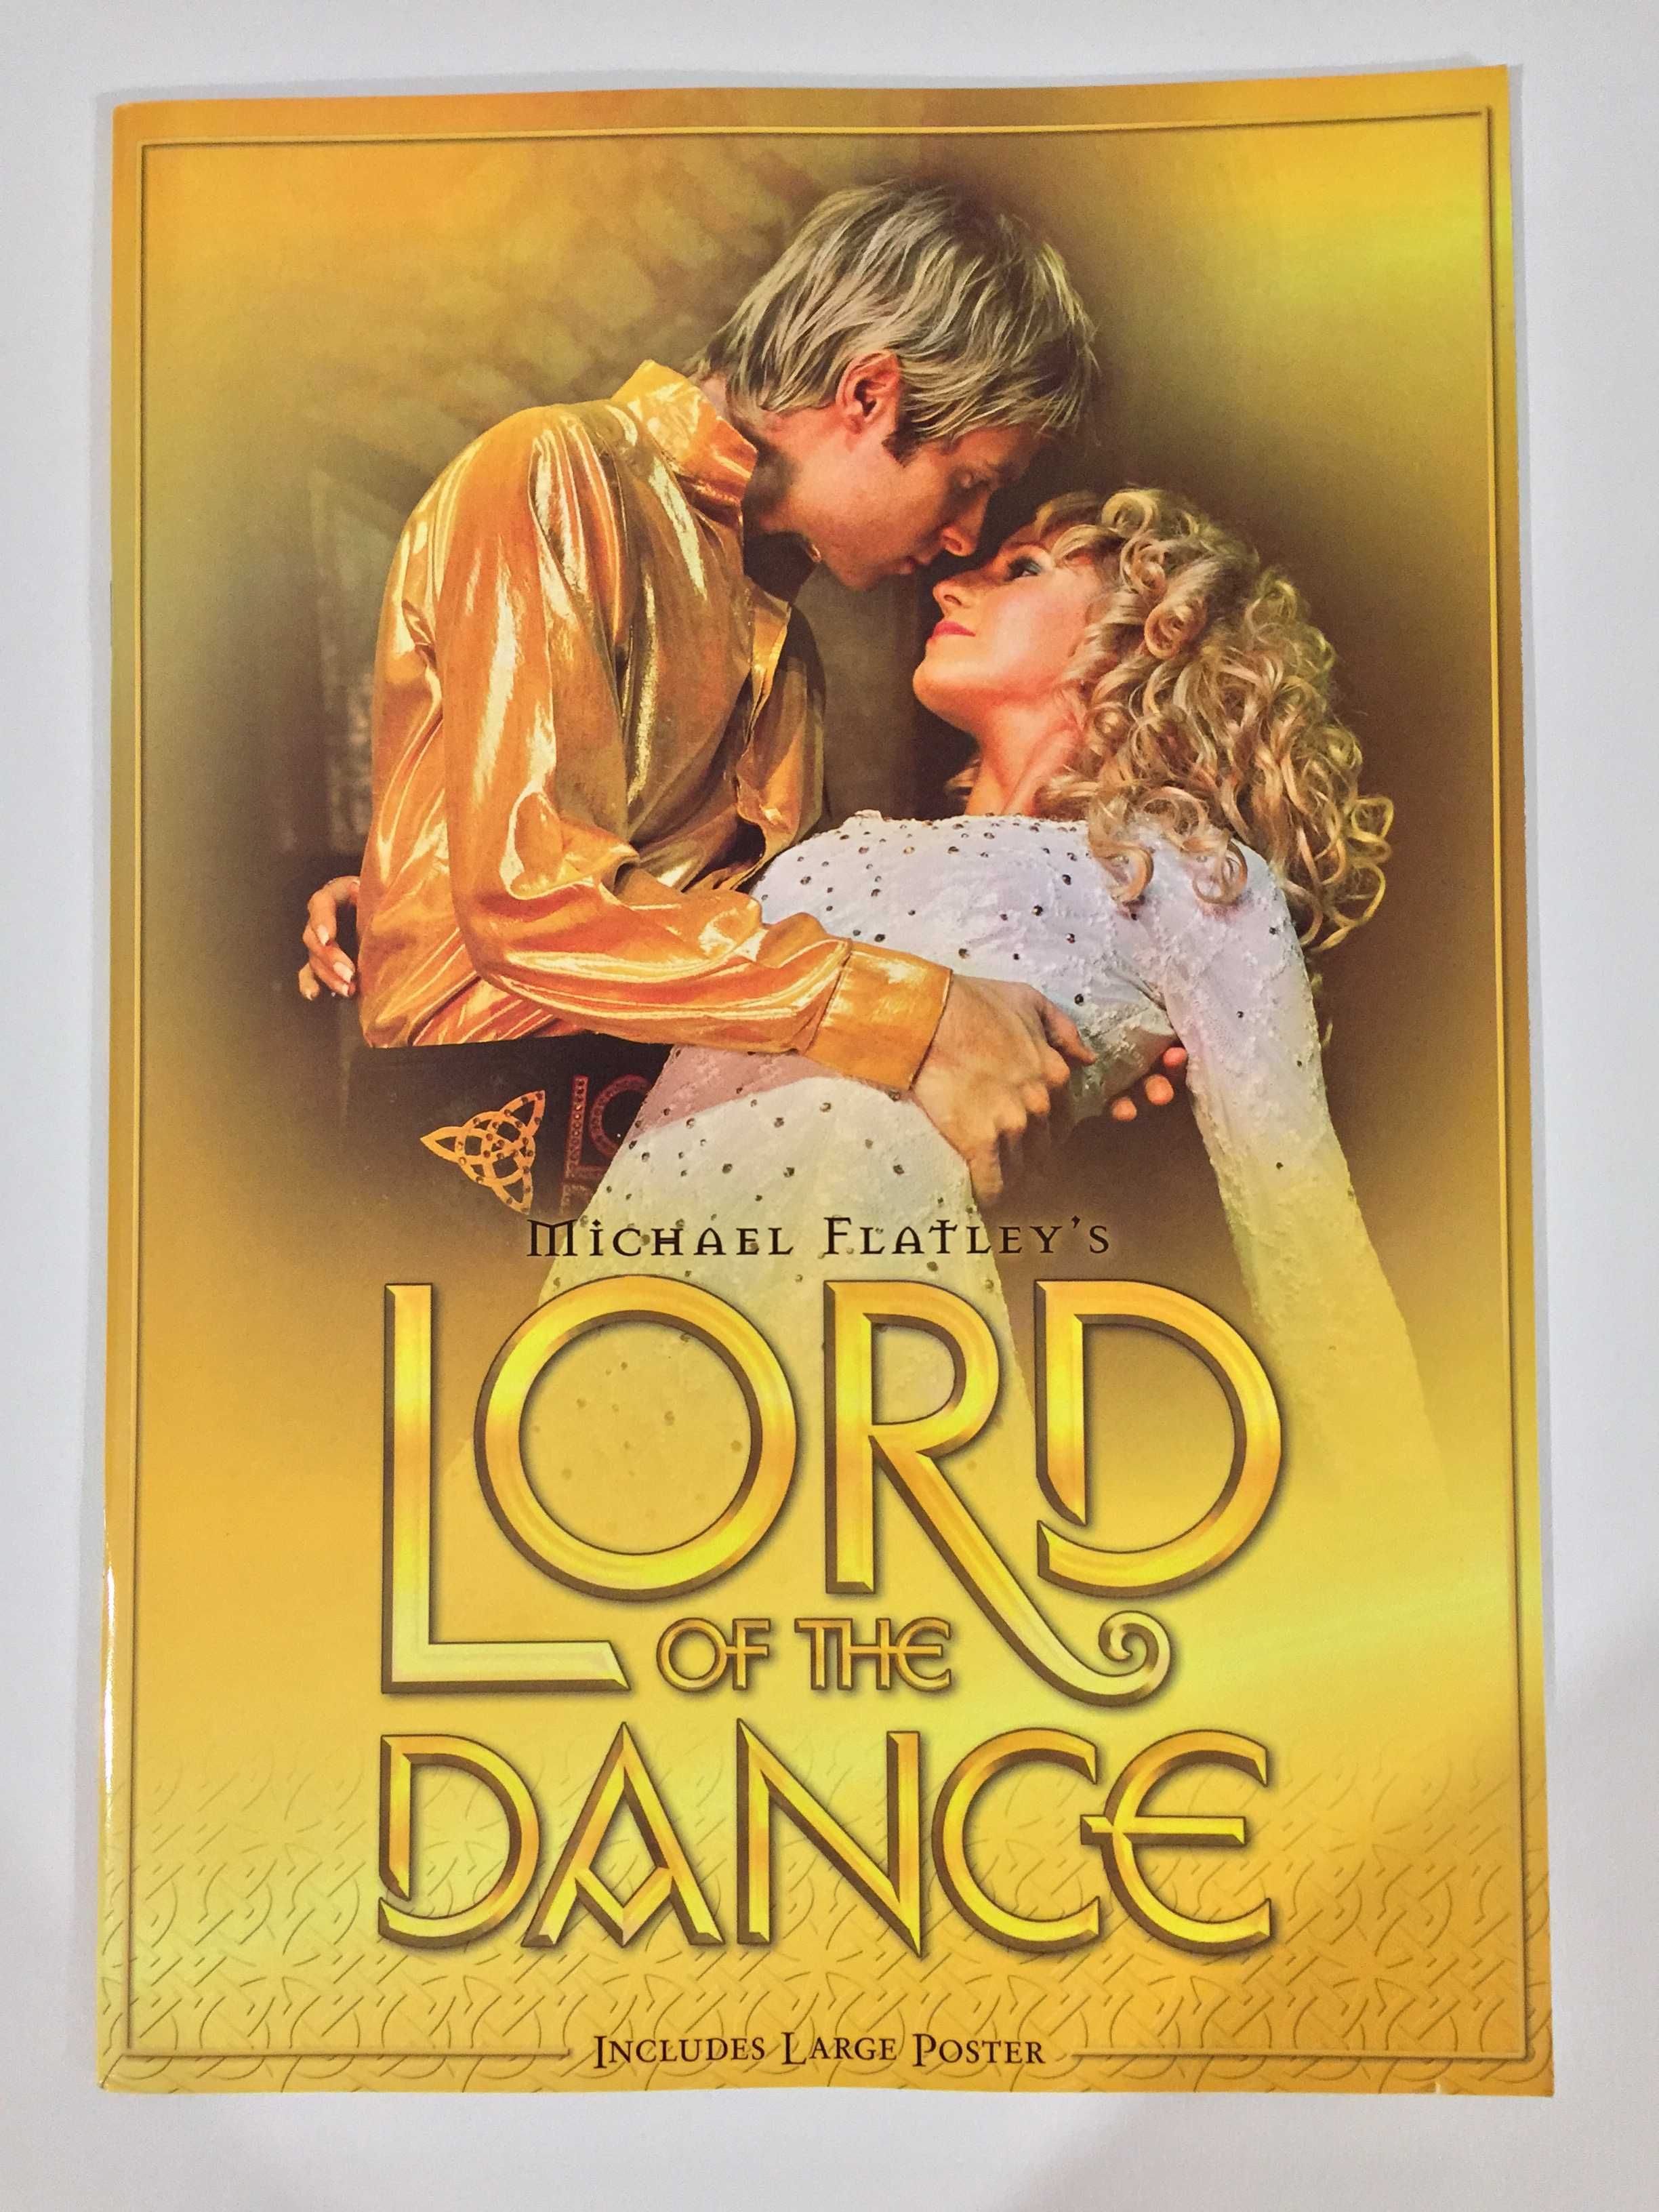 Michael Flatley’s Lord of the Dance програма и постер 2010